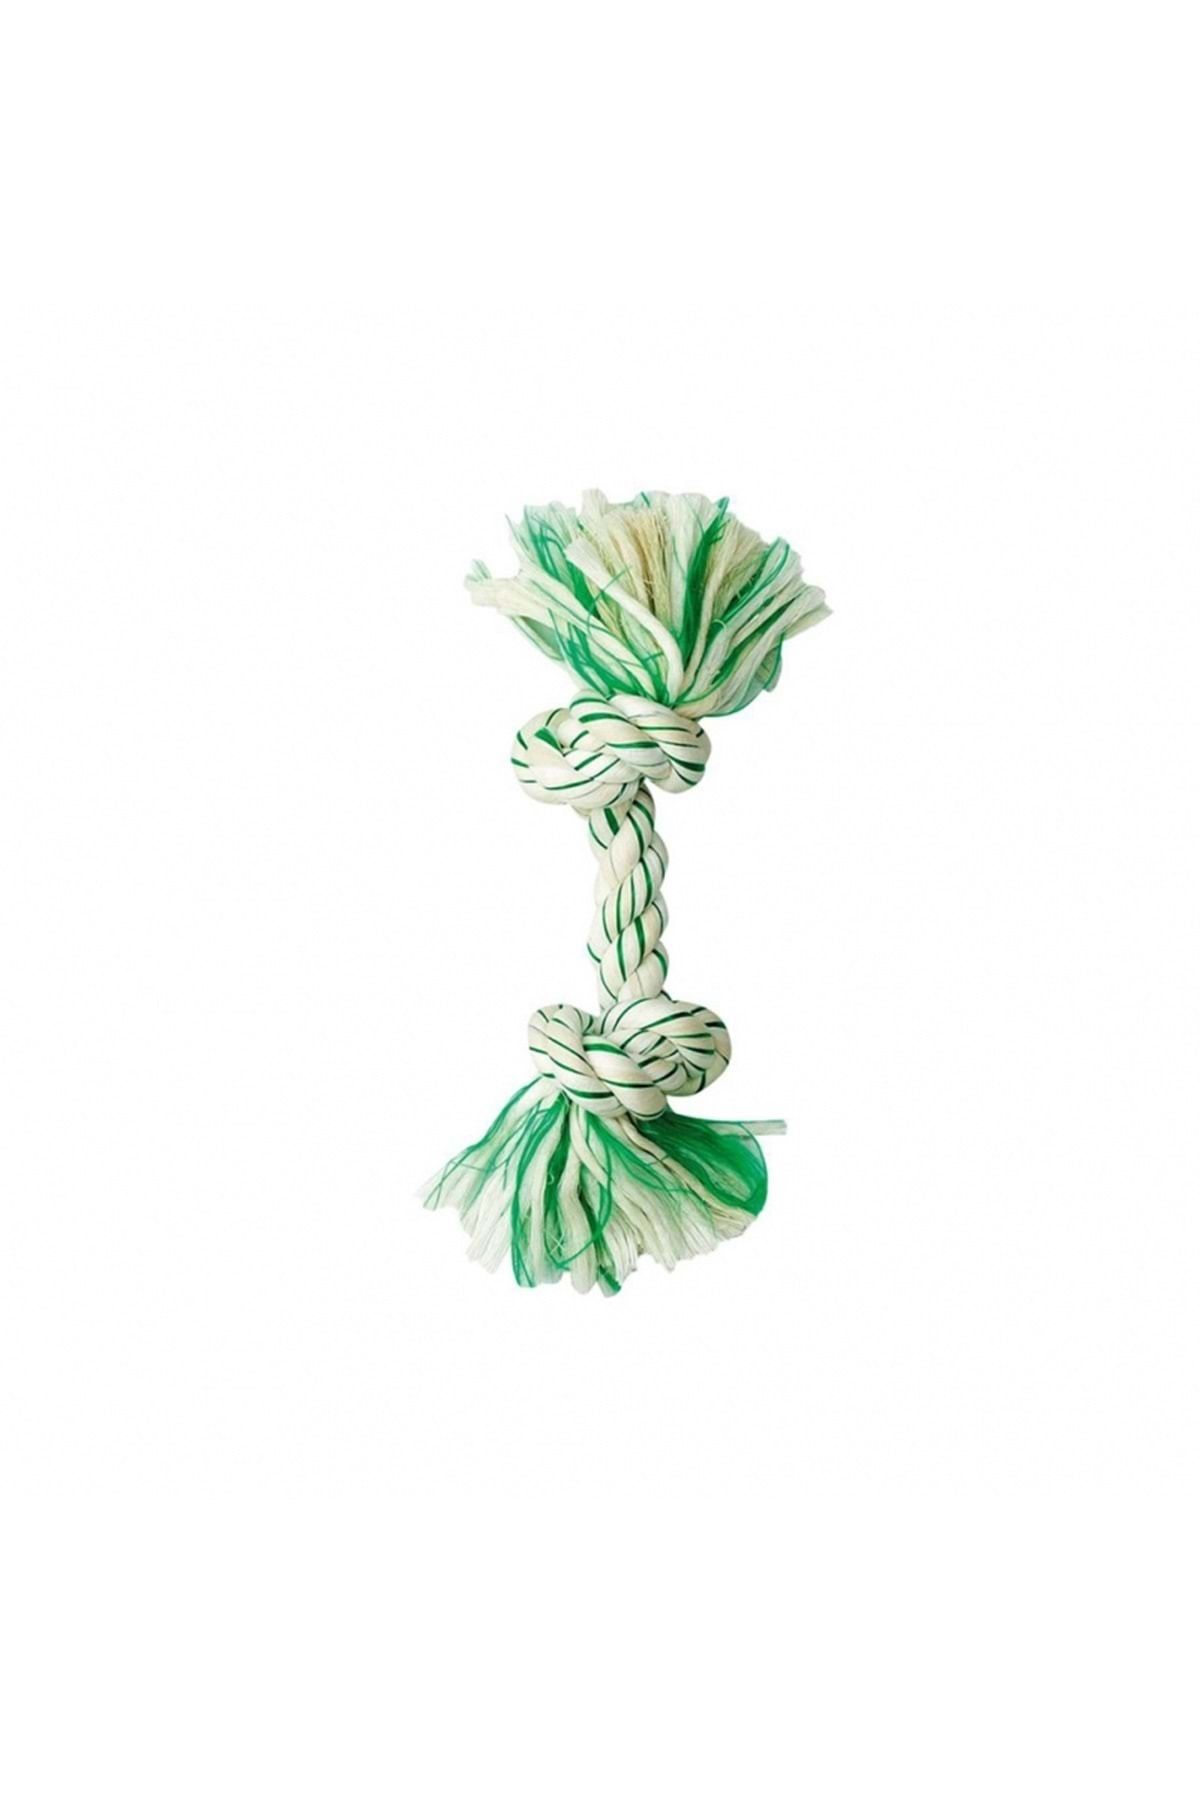 Karlie Karlıe Stres İpi Naneli Beyaz/Yeşil 48cm